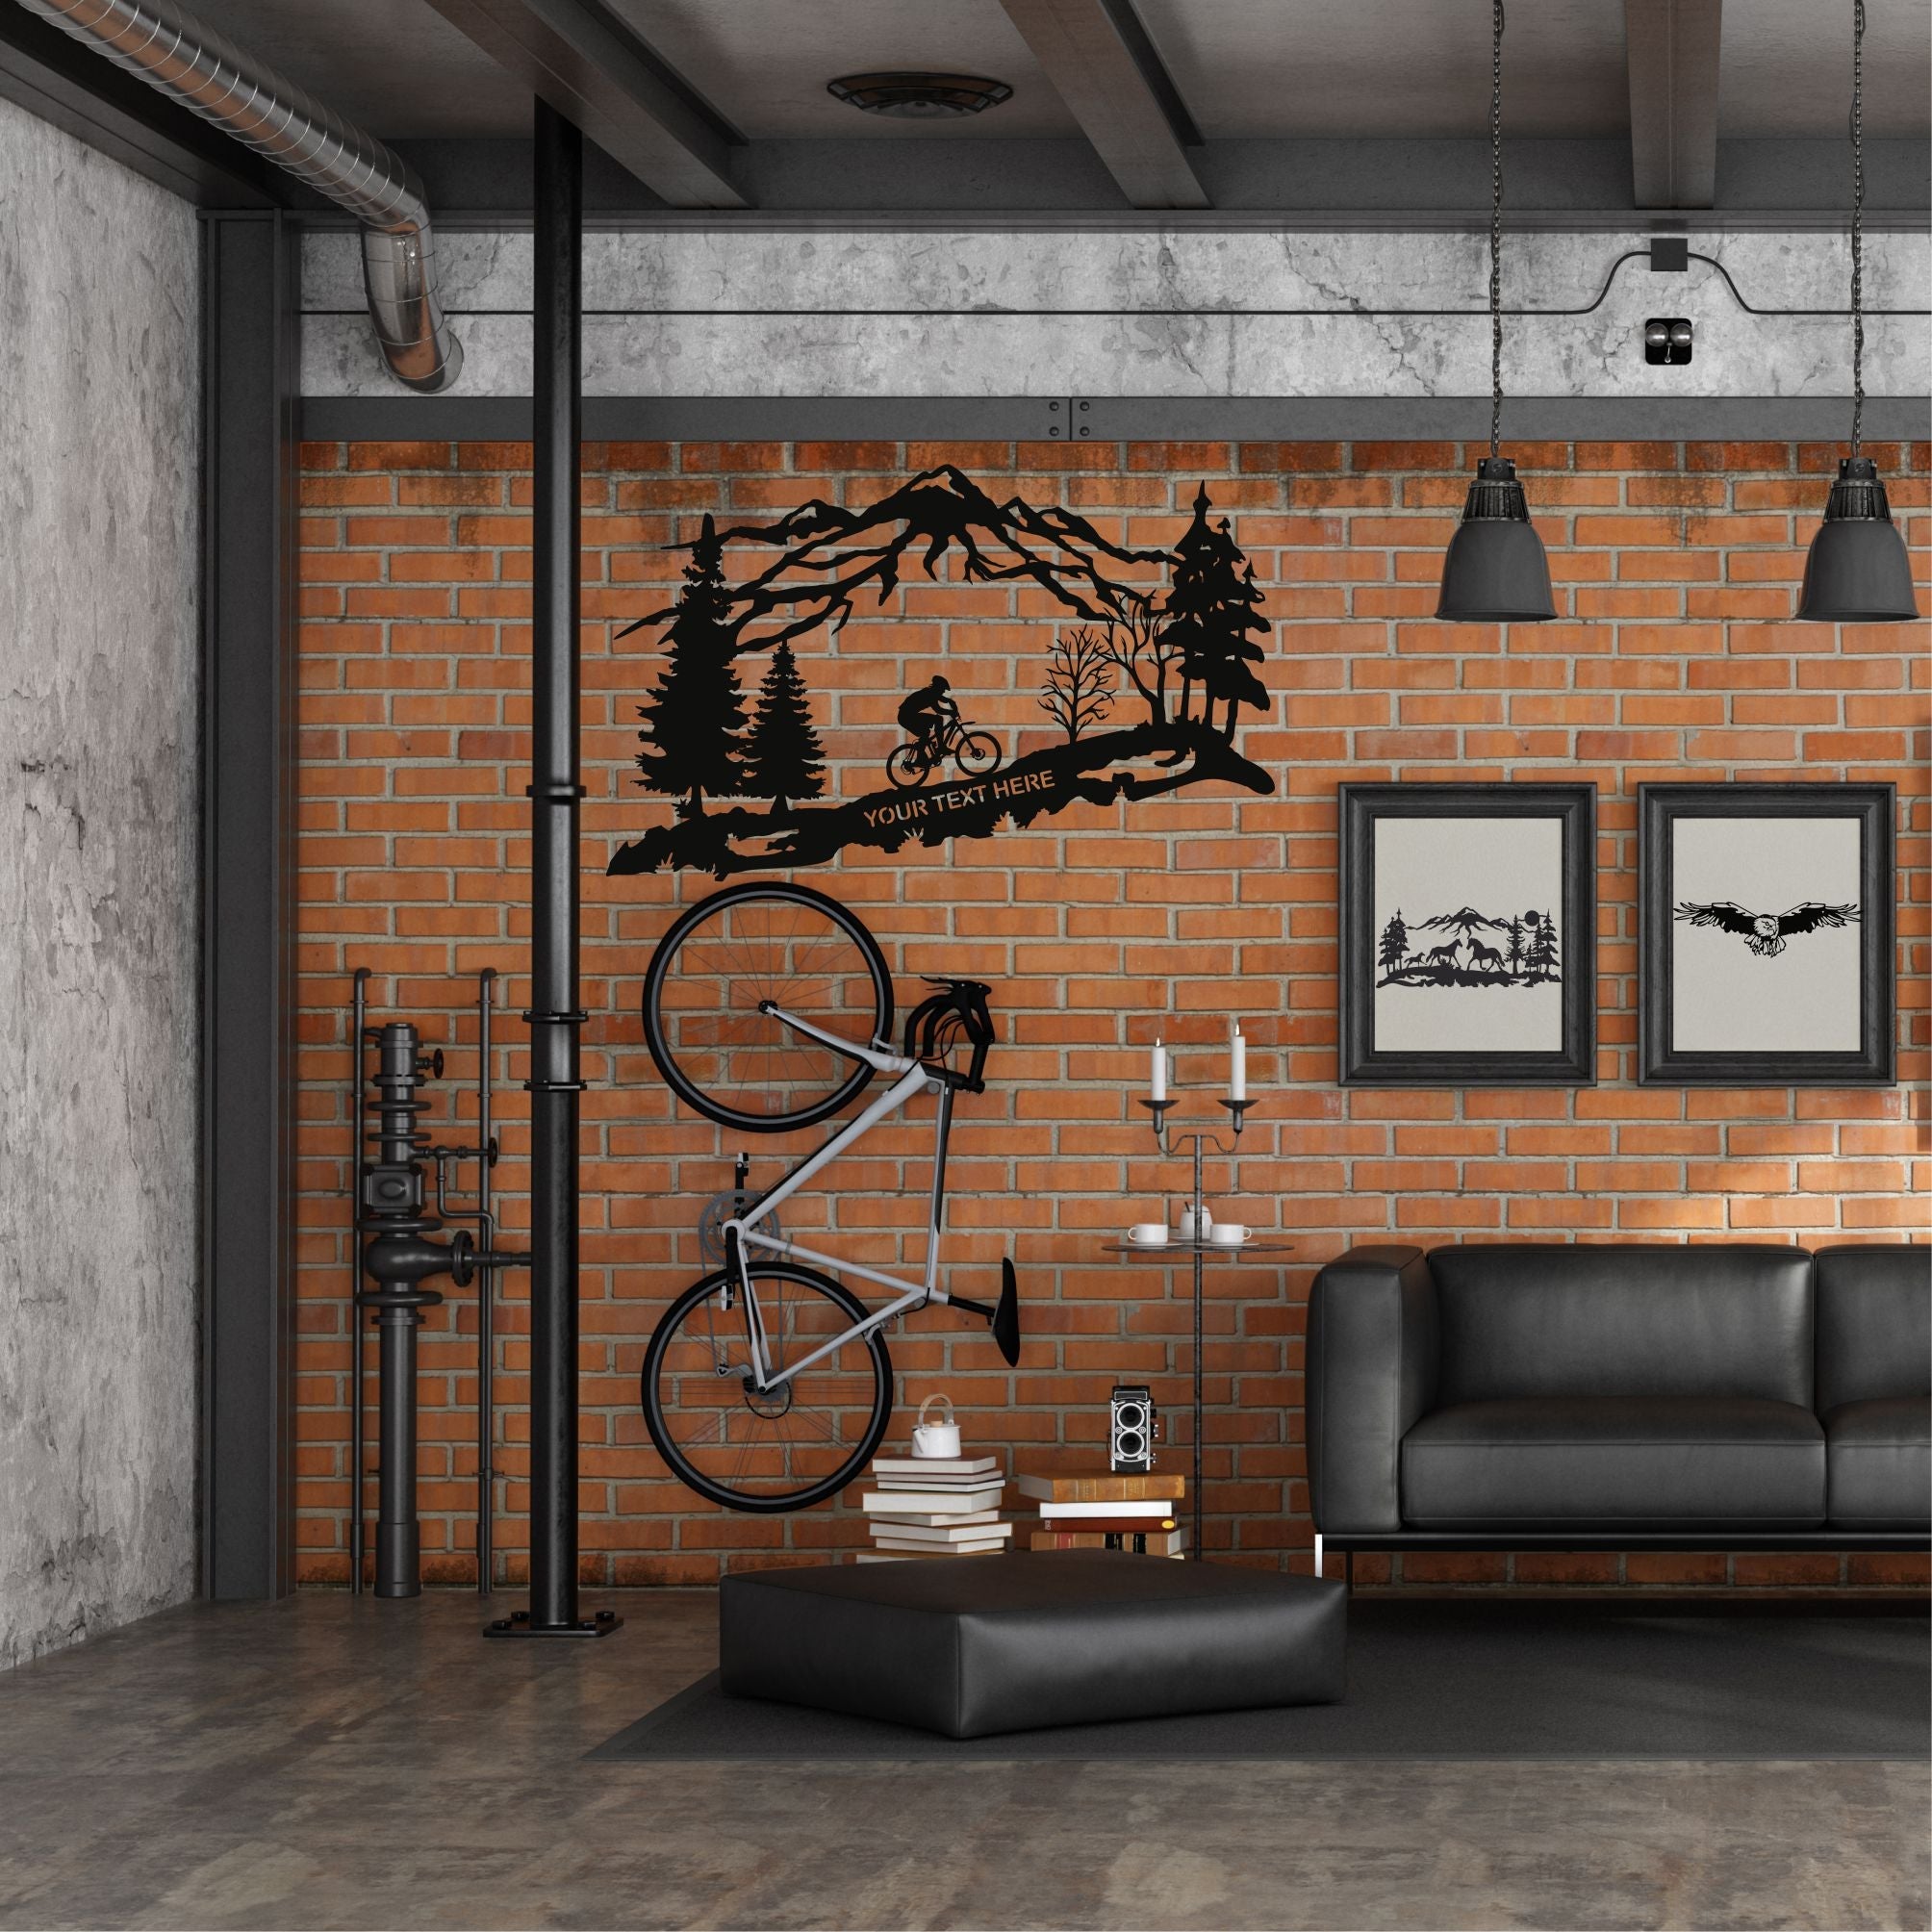 Metal Wall Decor with Bike